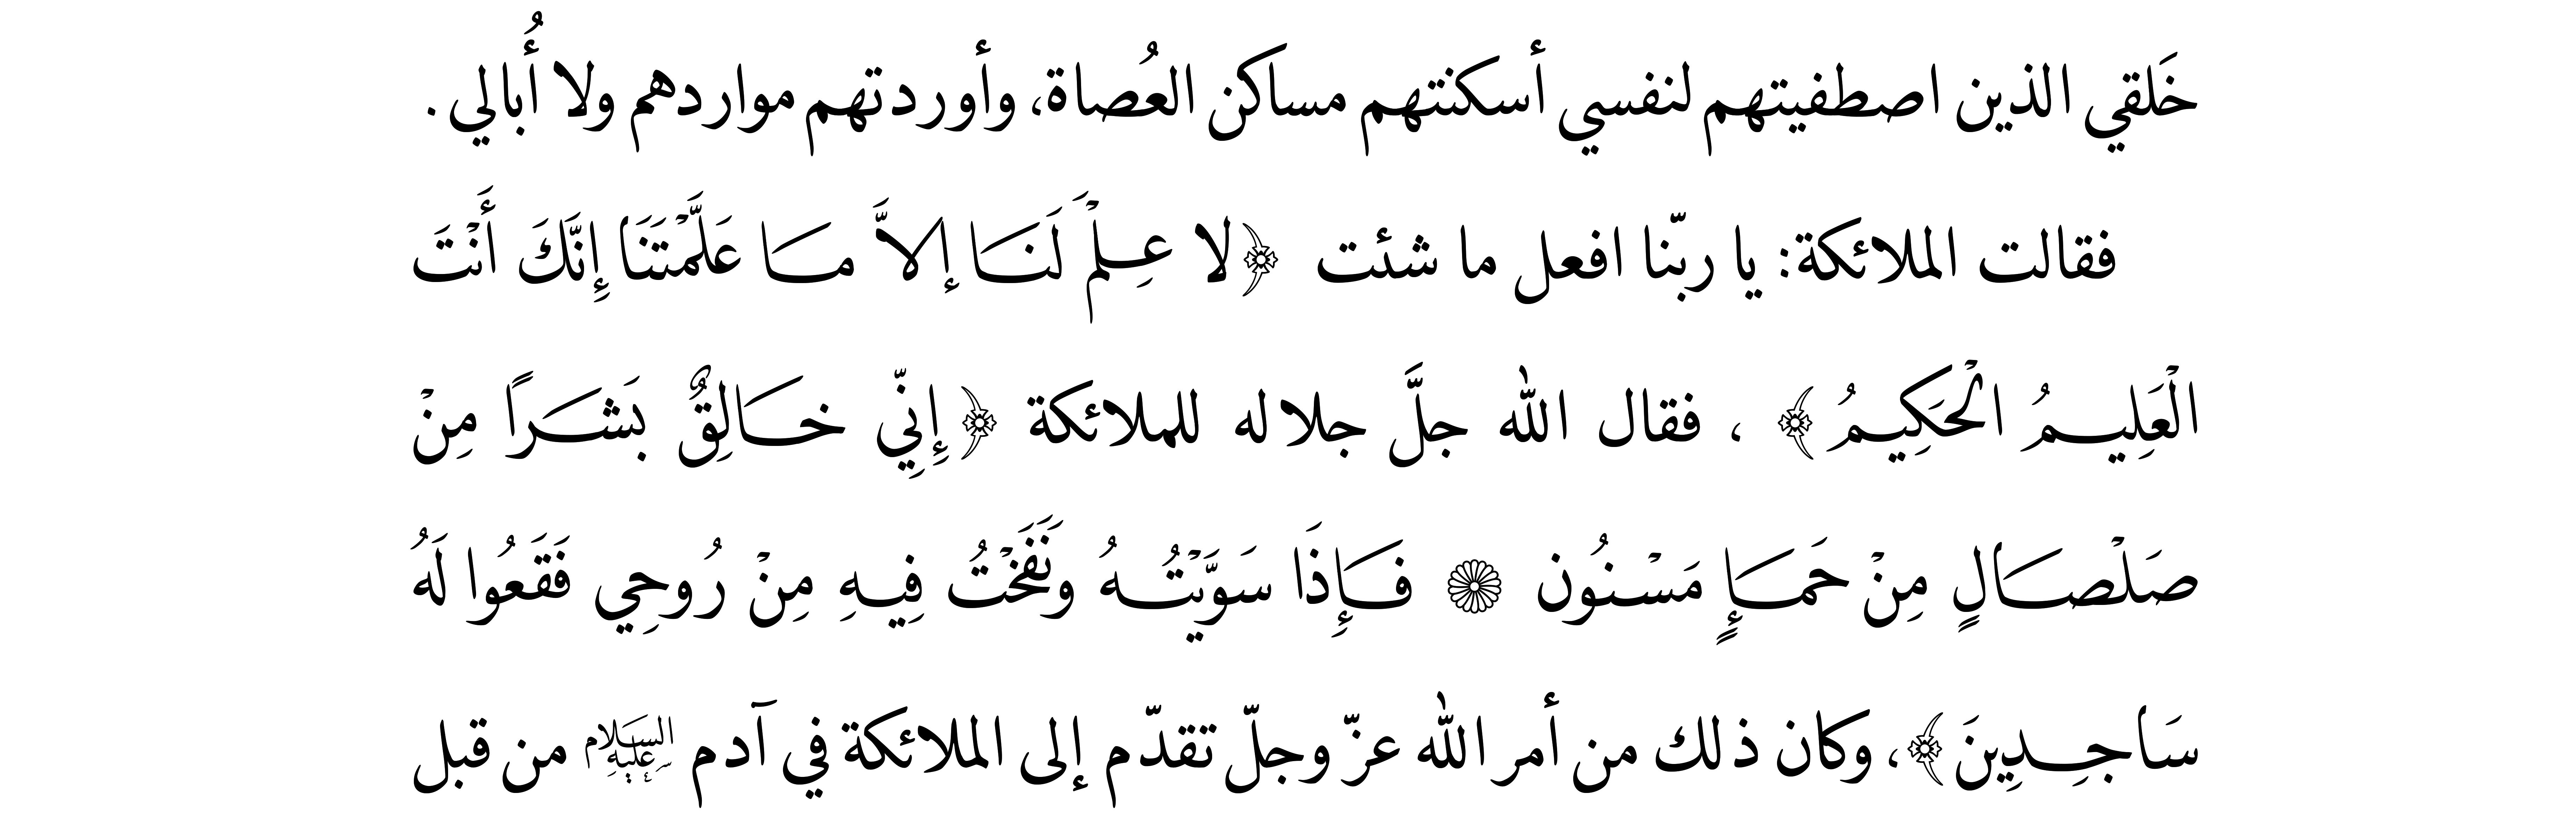 Five lines of Arabic text of the Tafsīr al-ʿAyyāshī.